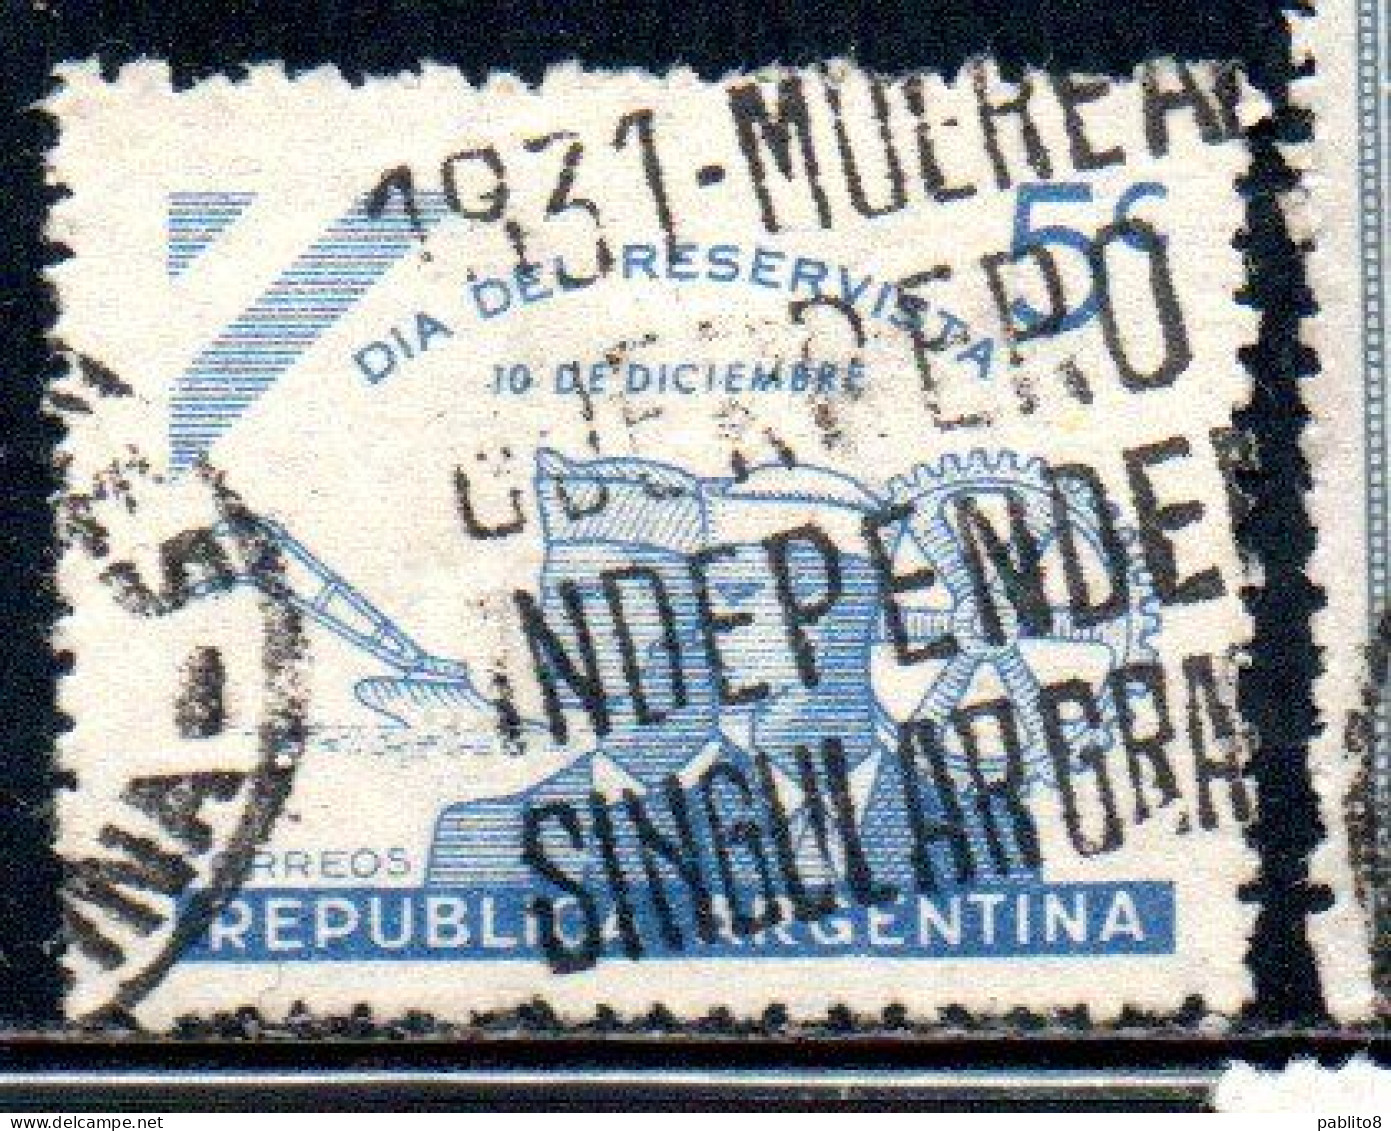 ARGENTINA 1944 DAY OF RESERVISTS 5c USED USADO OBLITERE' - Usados